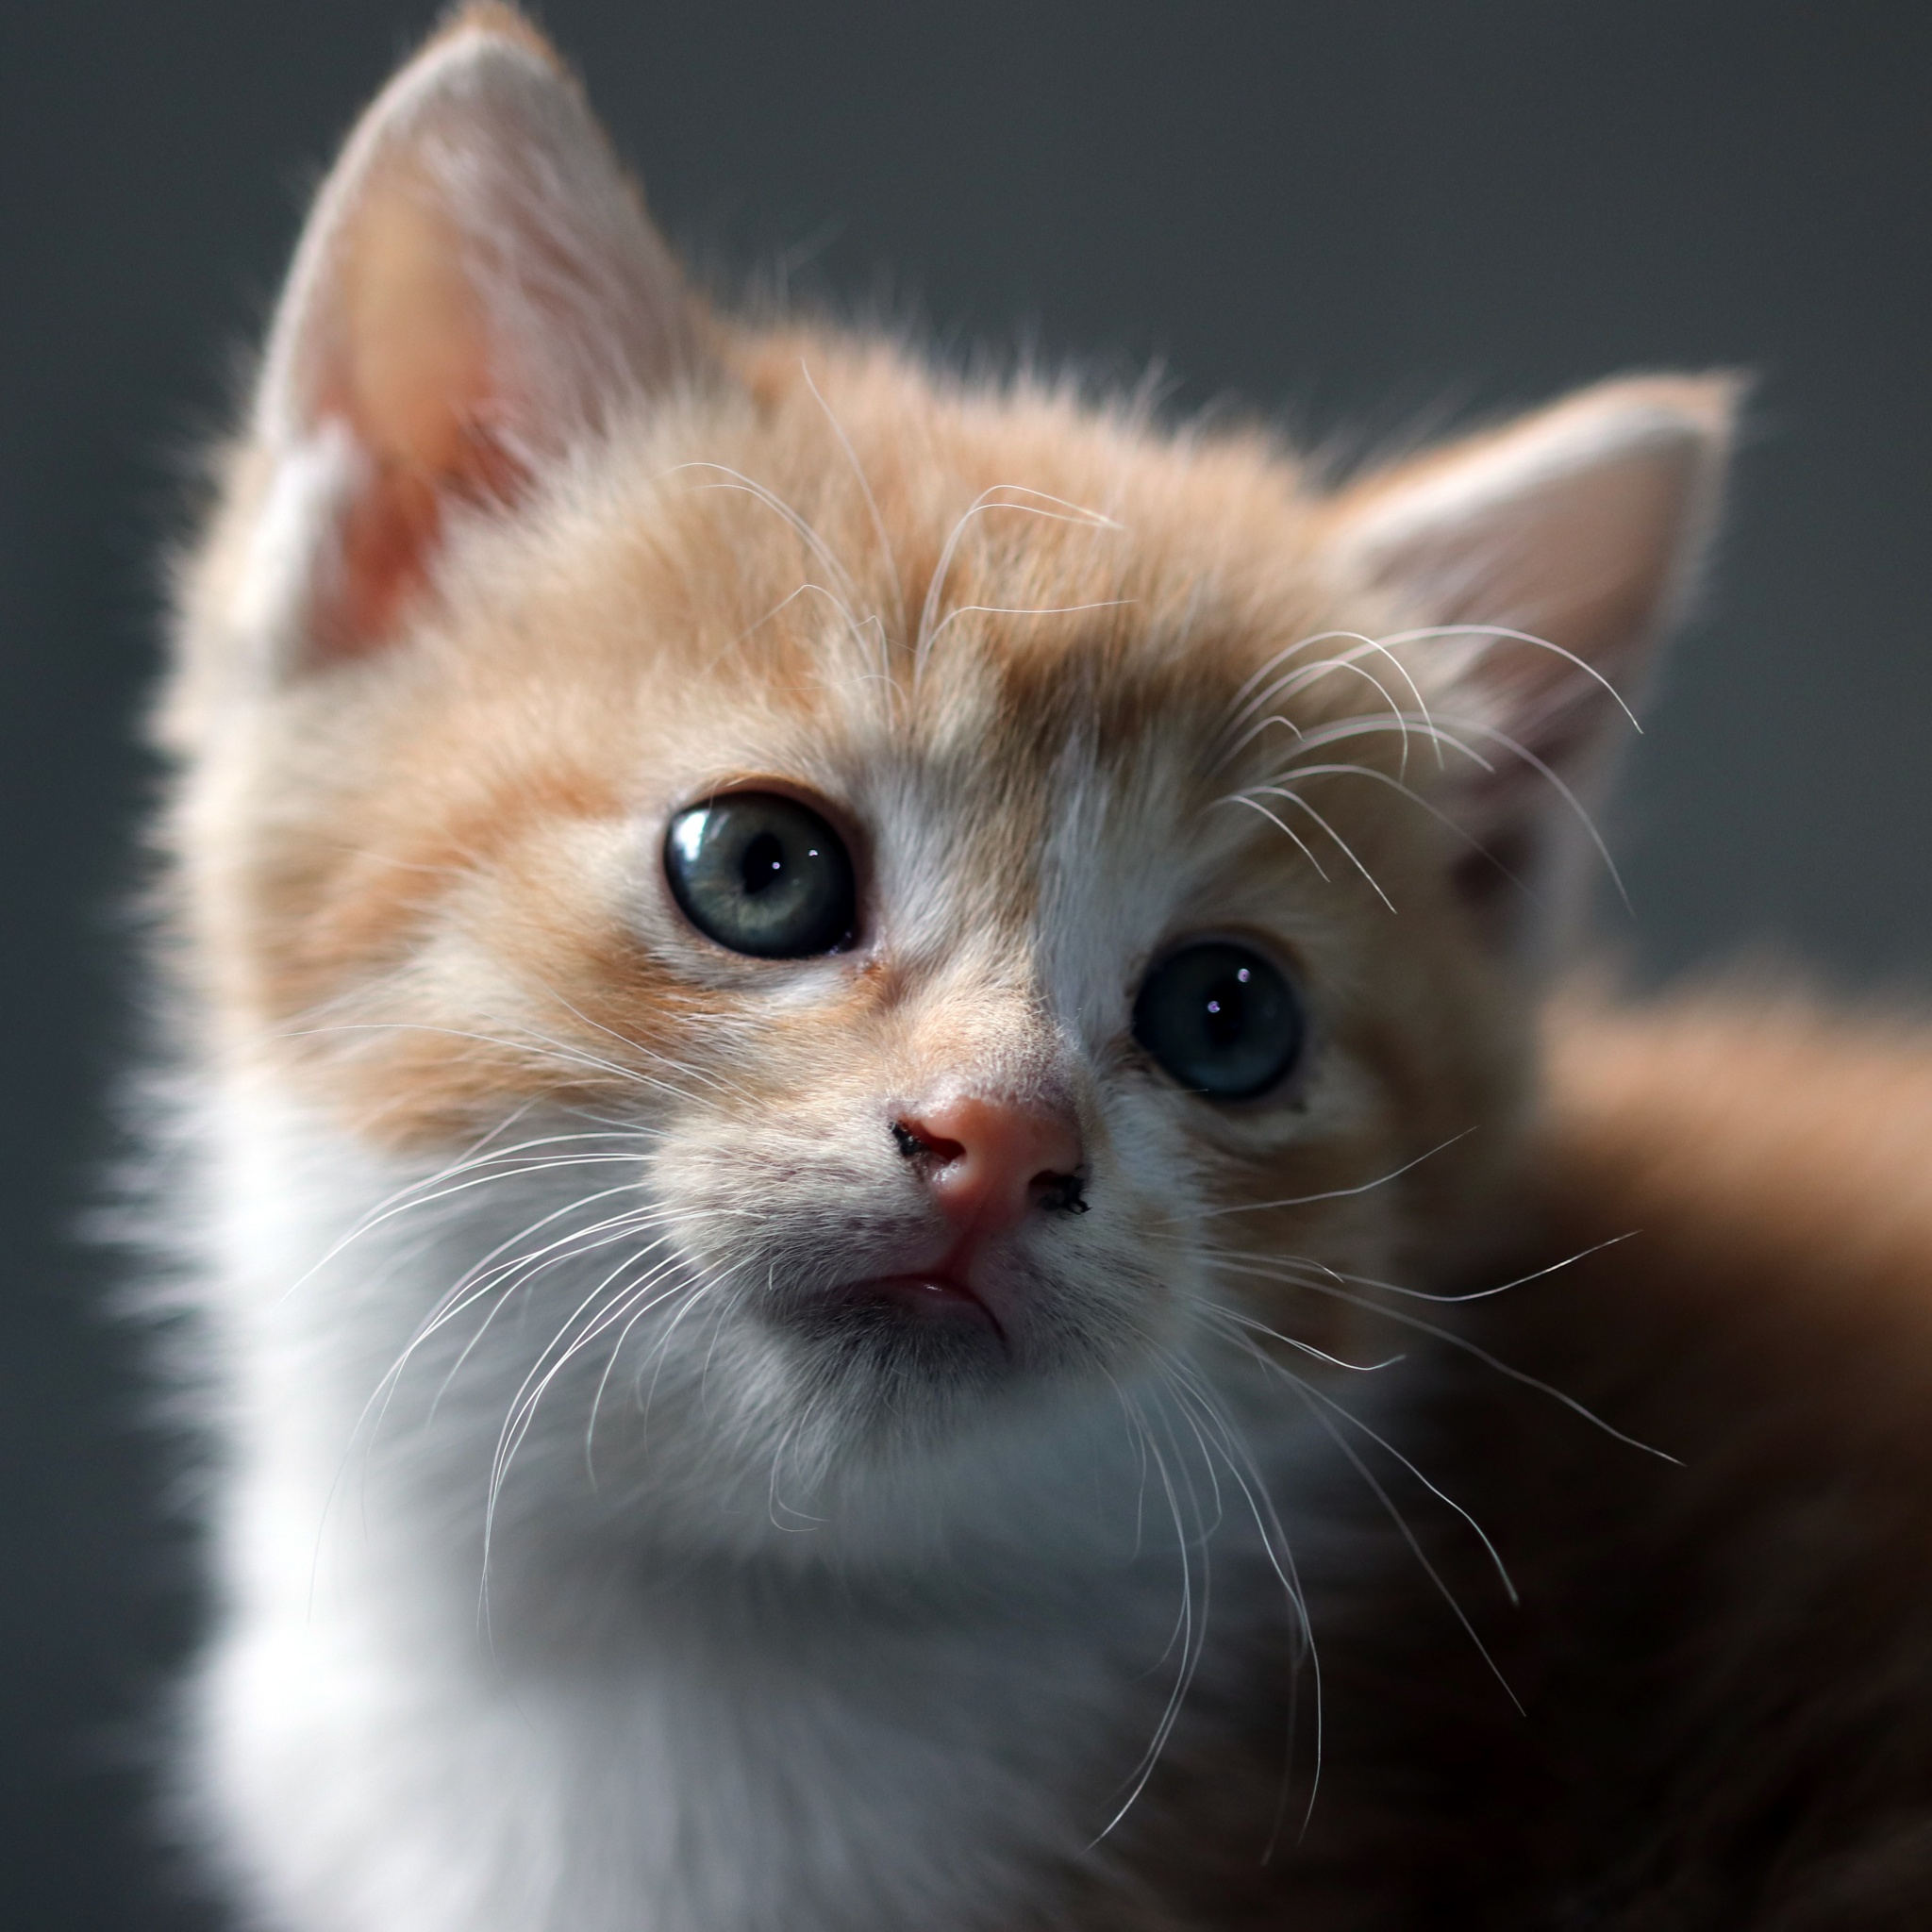 Cat 4K Wallpaper, Kitten, Pet, Domestic Animals, Cute , Portrait, Fur ...